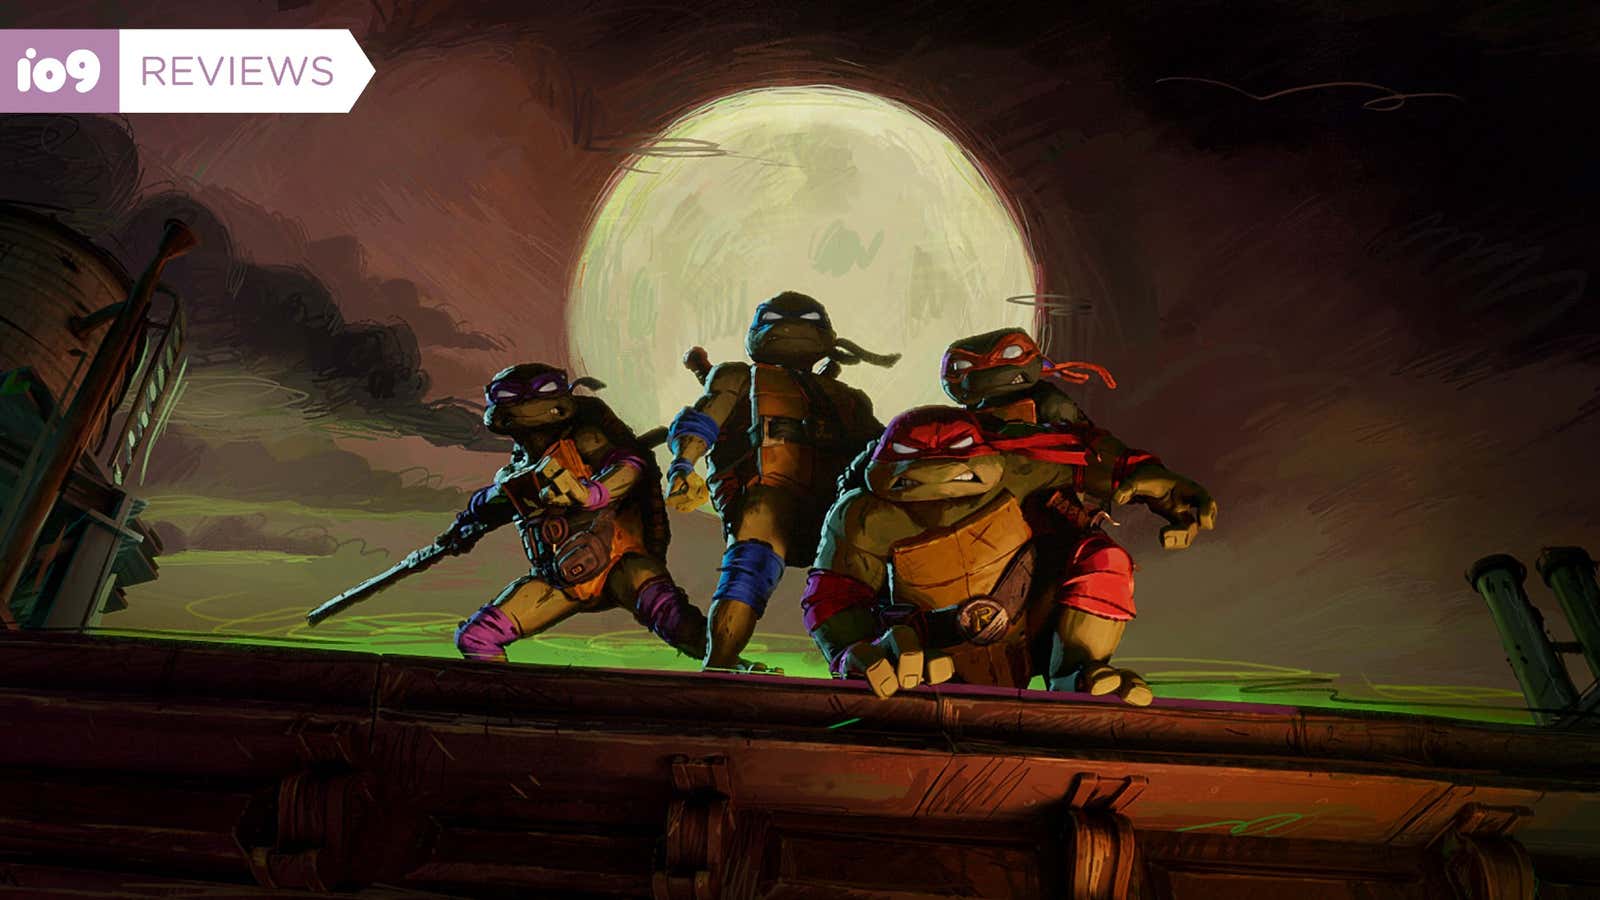 The Turtles of Mutant Mayhem.